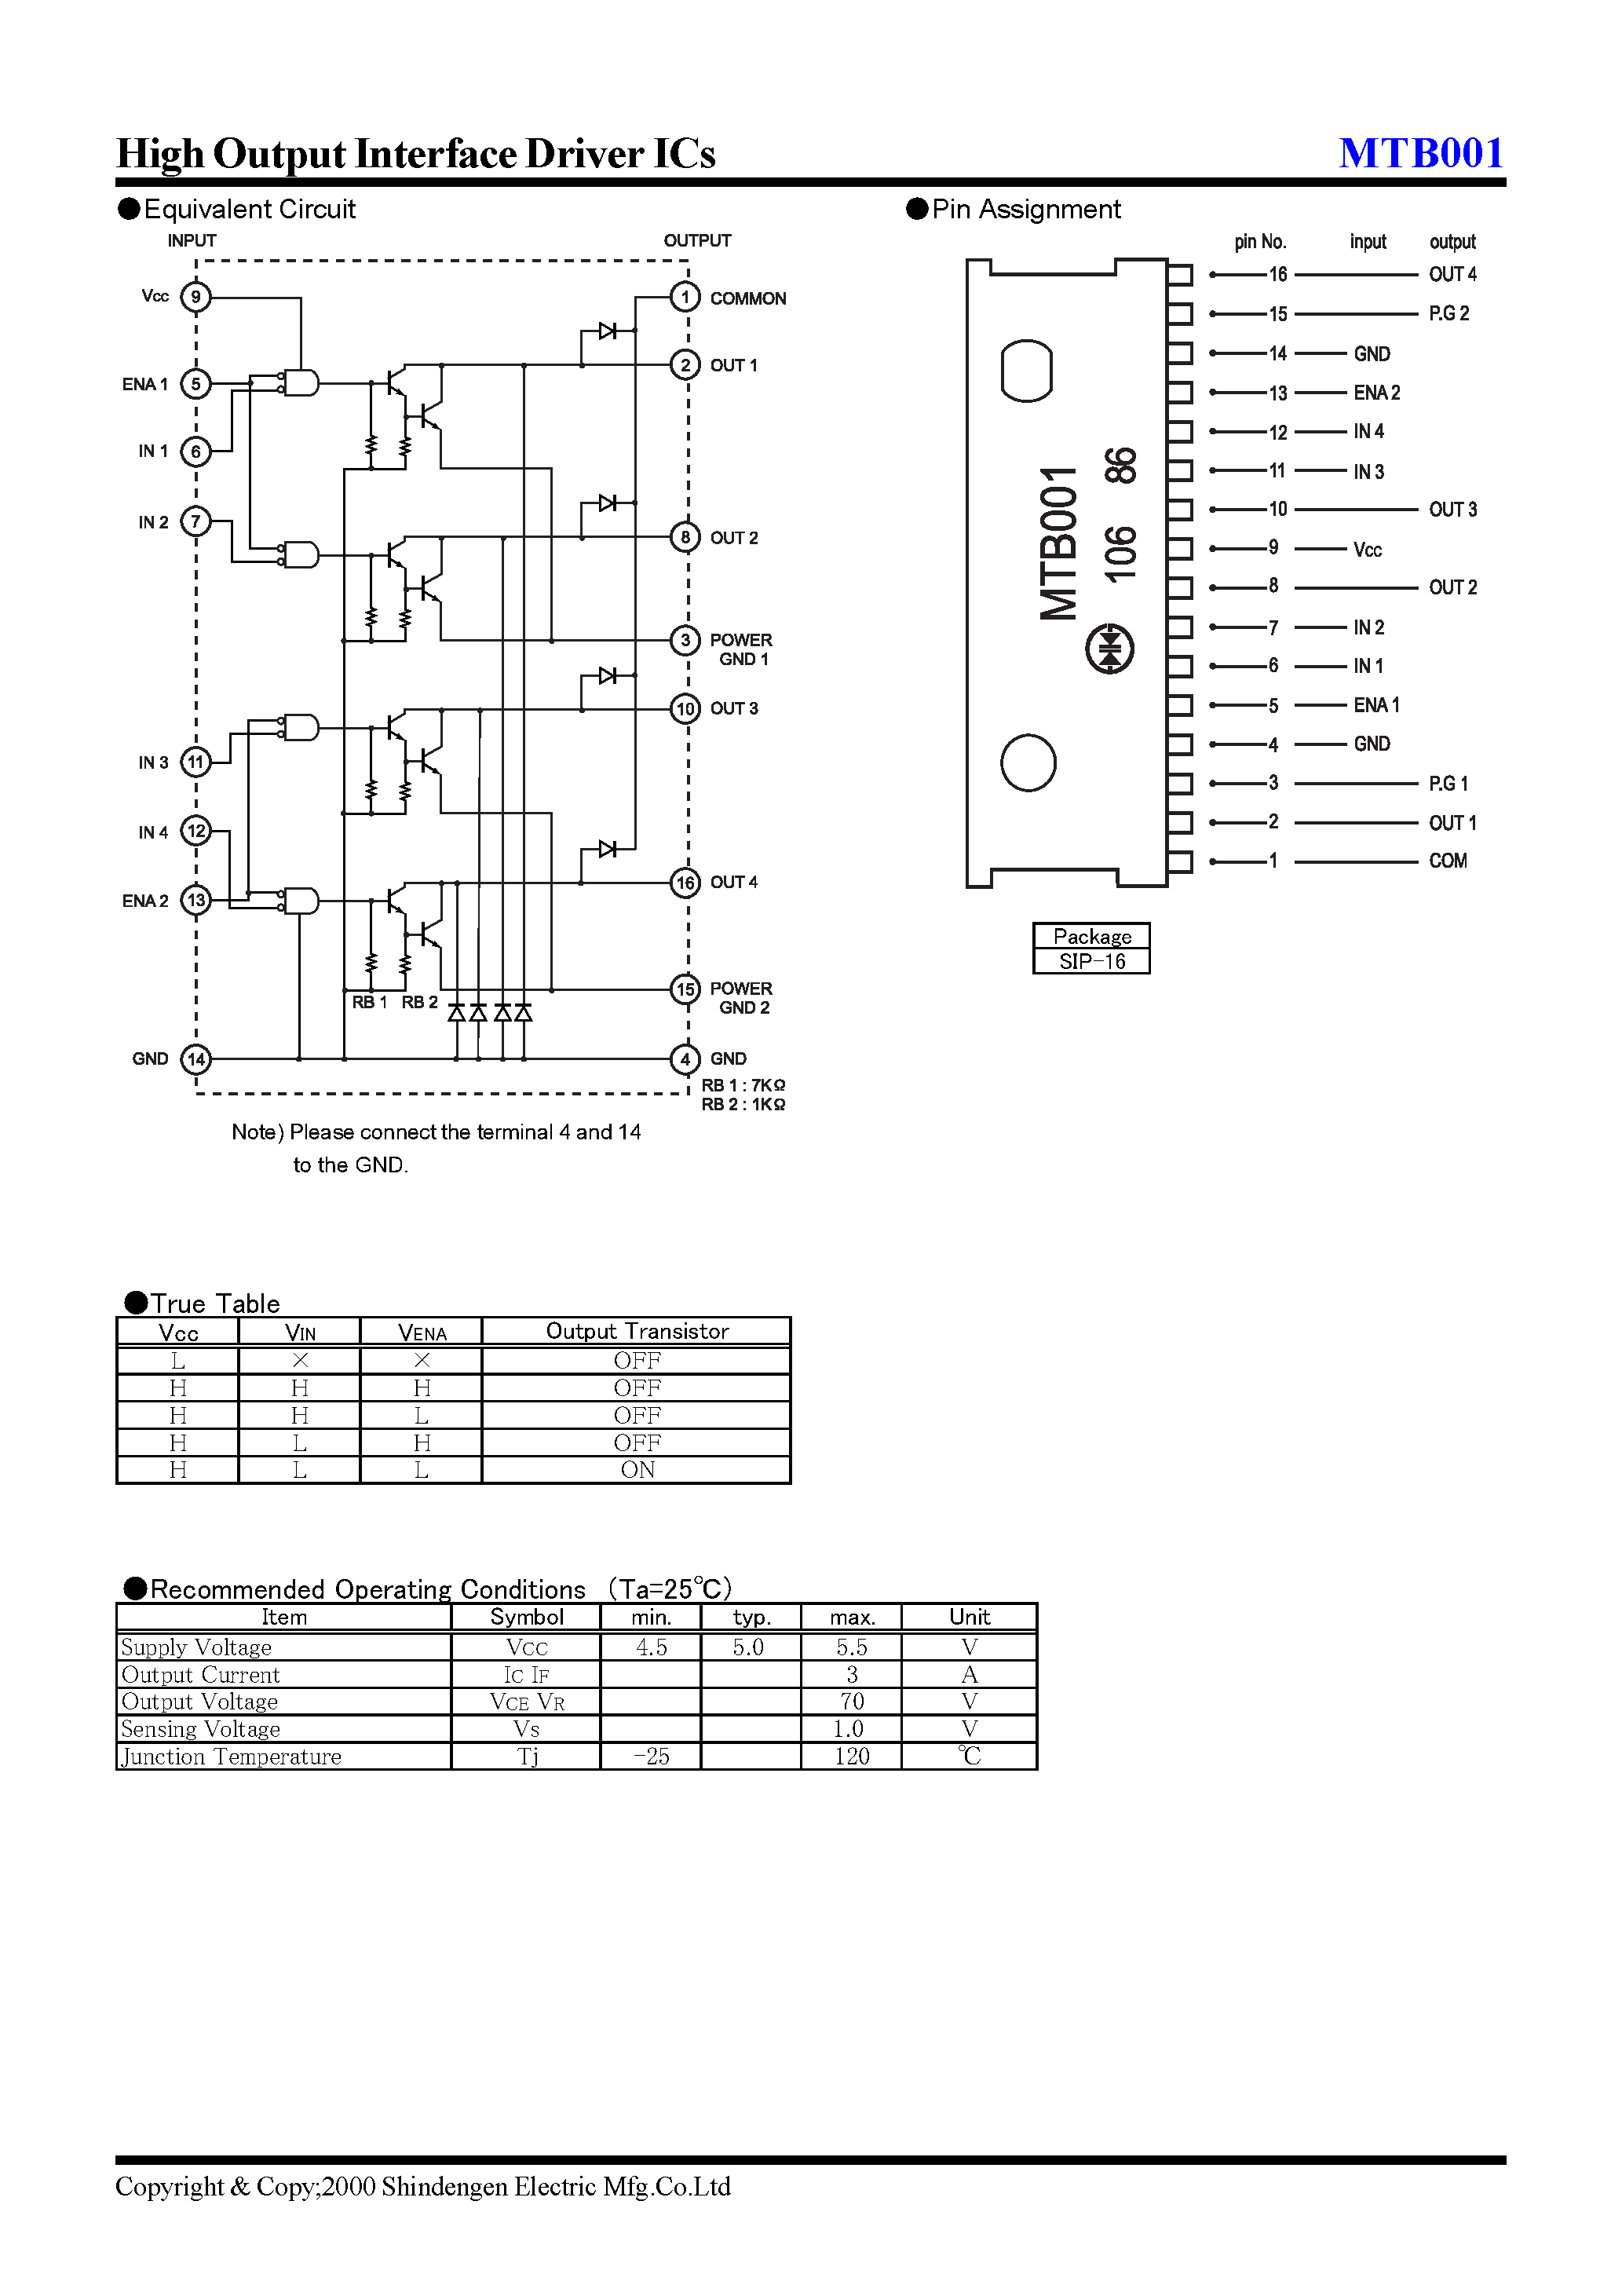 Datasheet MTB001 - High Output Interface Driver ICs page 2